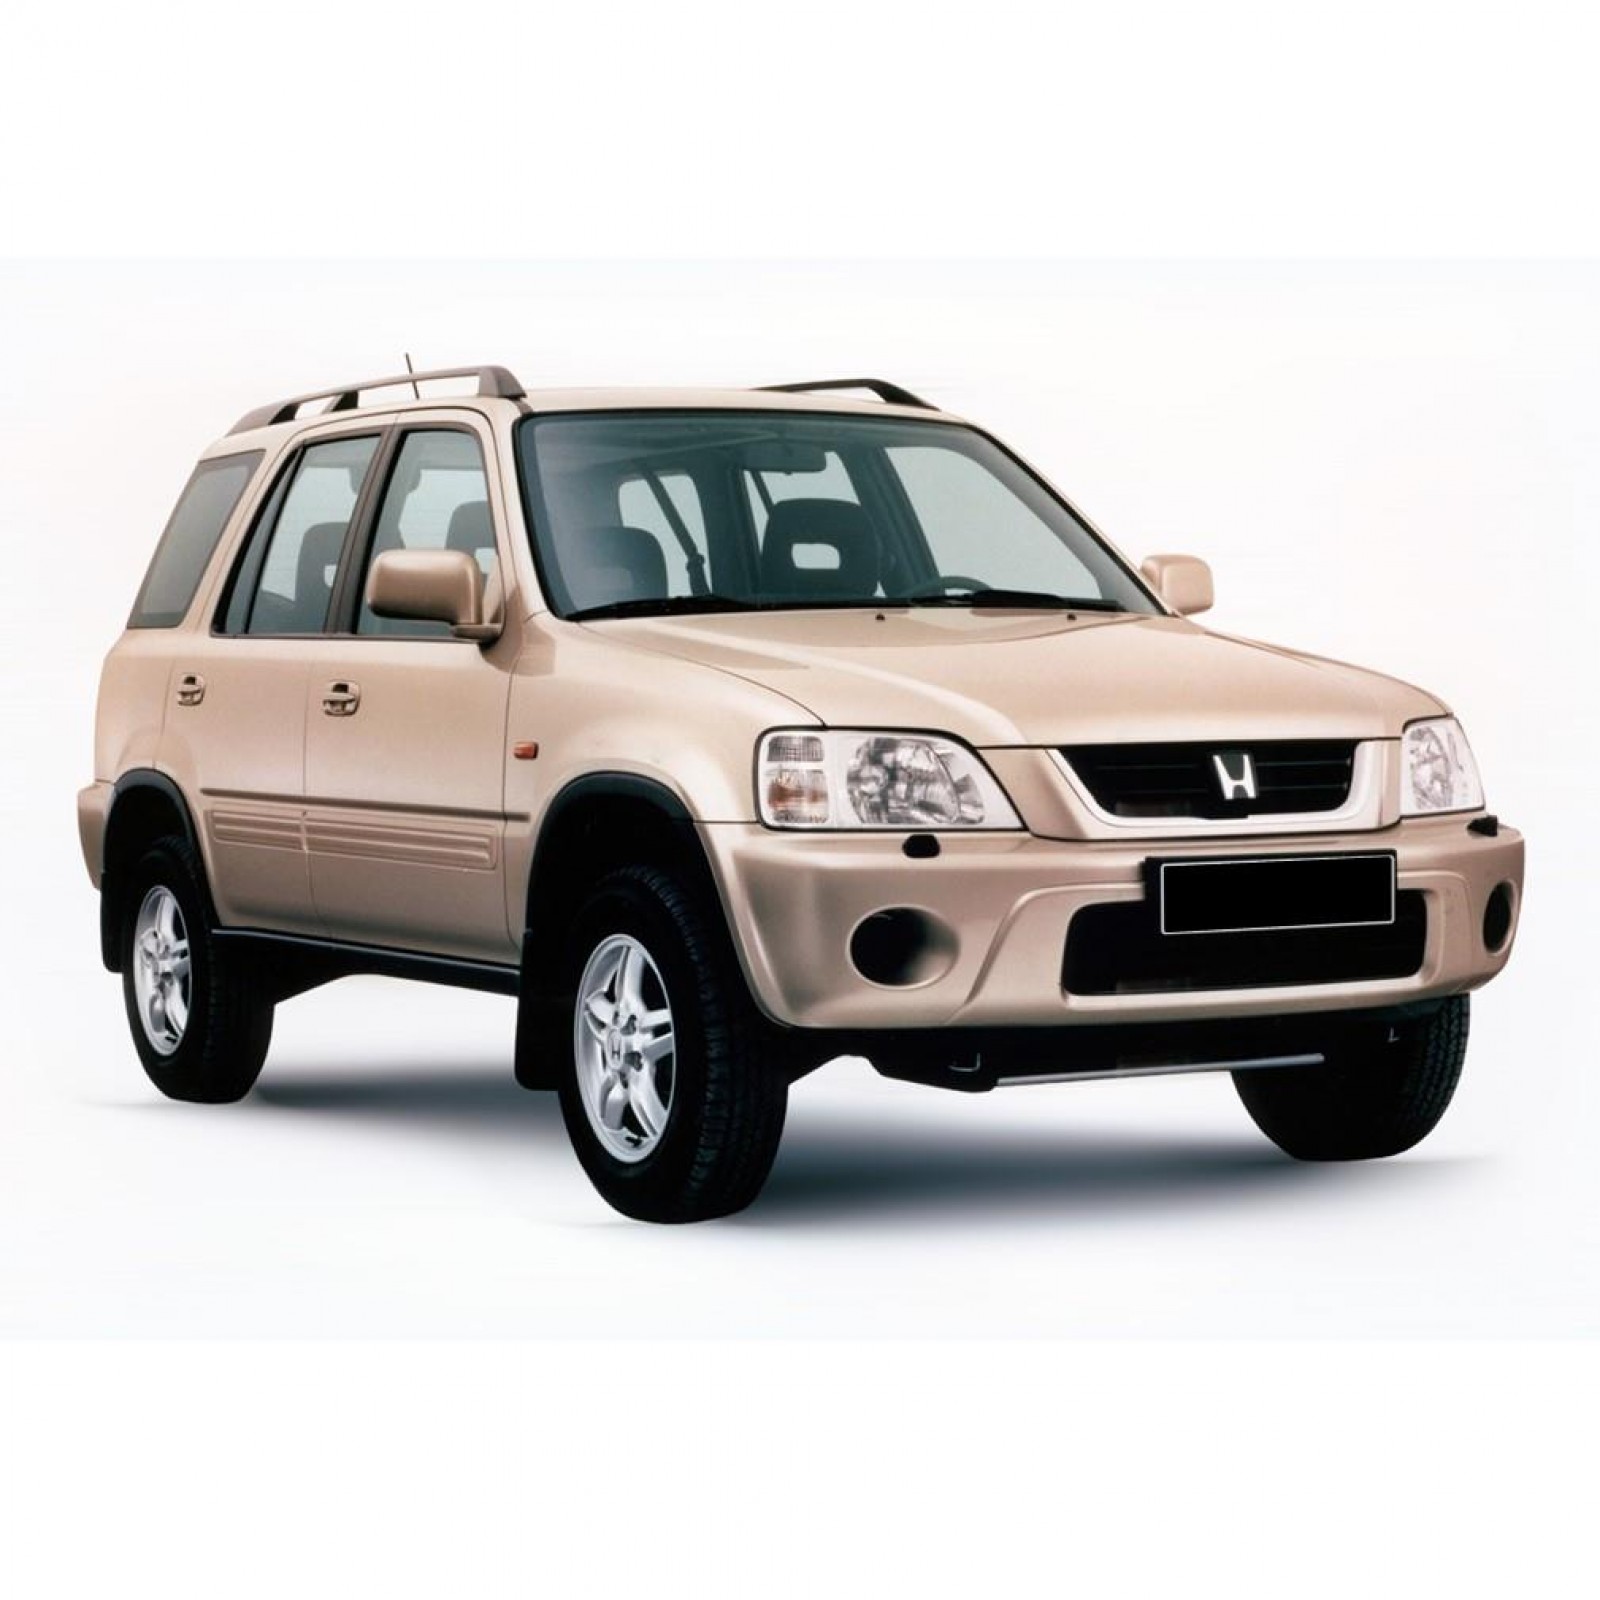 Хонда црв 2001 год. Honda CR-V 2001. Honda CR-V rd1. Honda CRV rd1. Honda CR-V rd1 2001.